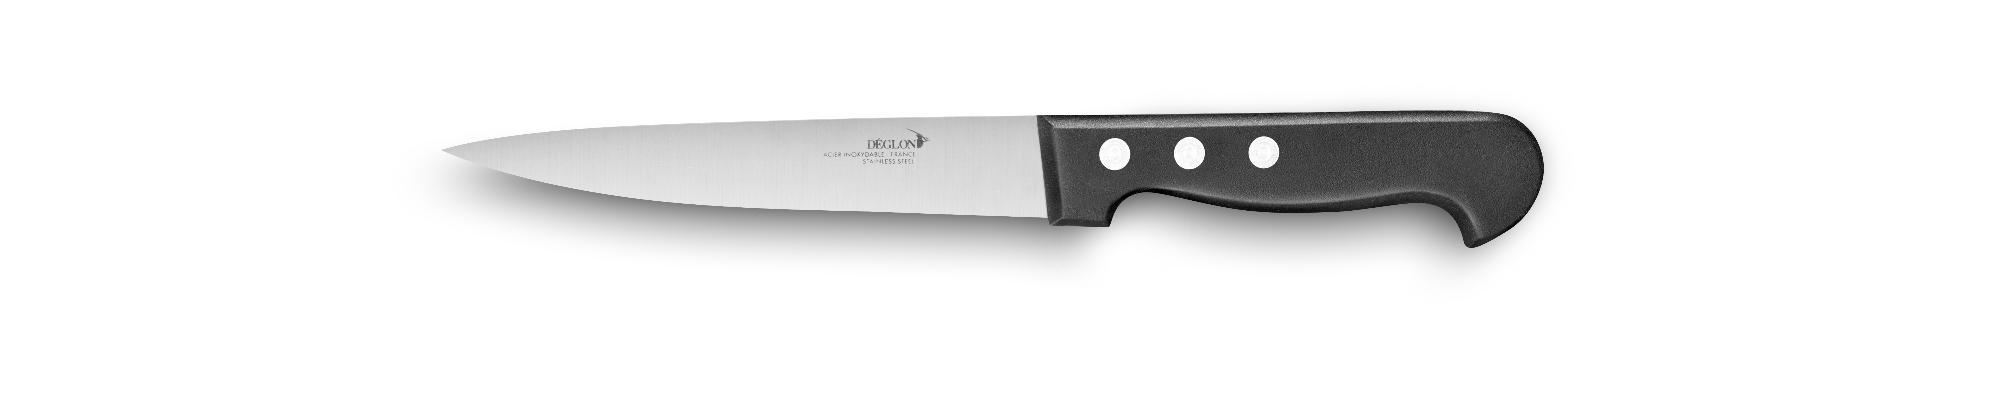 Maxifil boning knife, 180mm